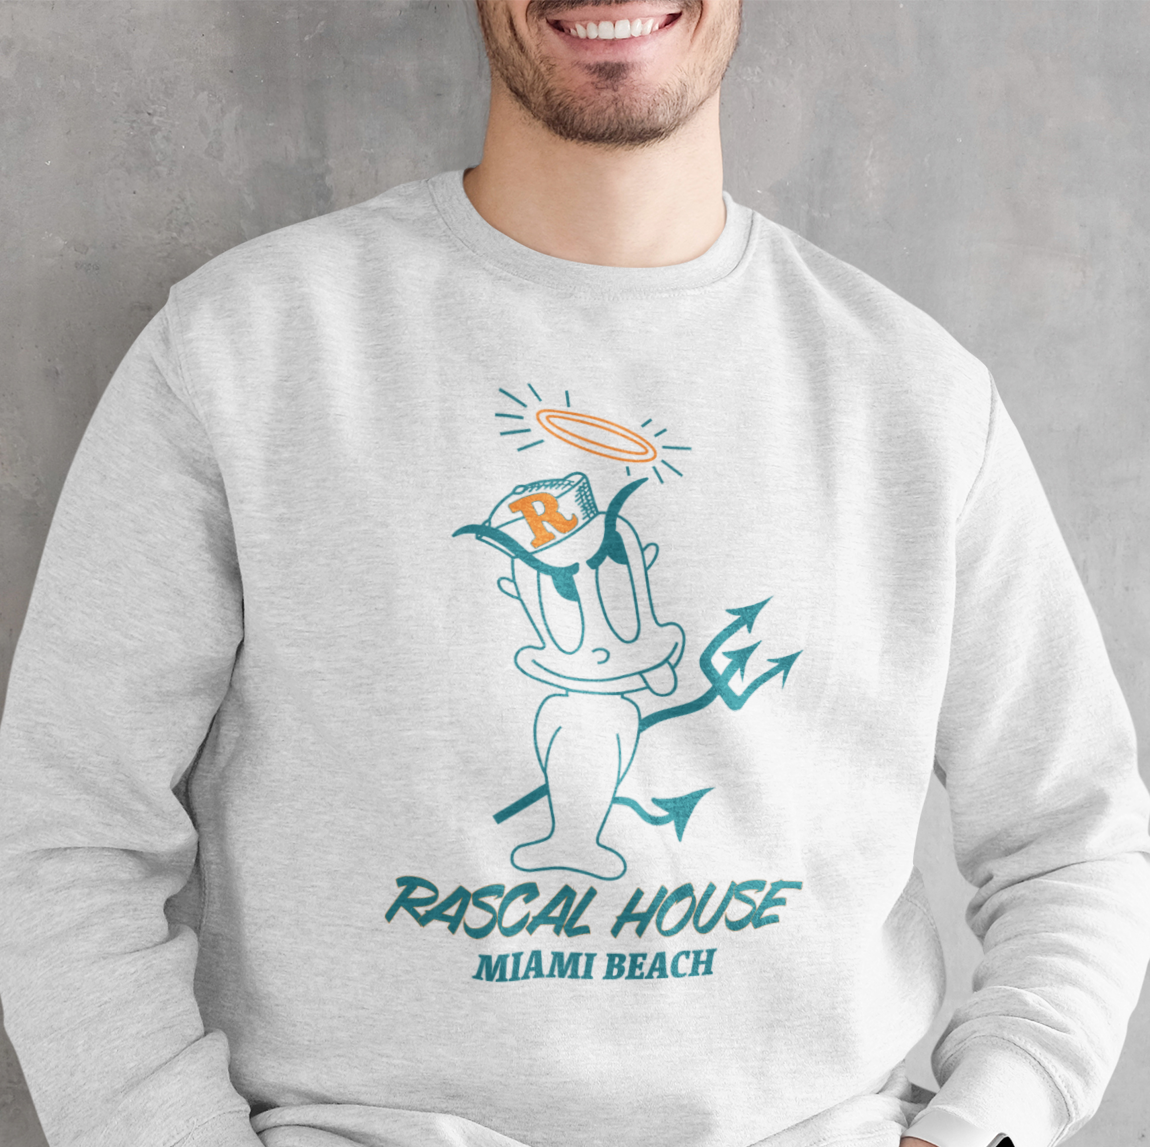 Rascal House Miami Beach sweatshirt